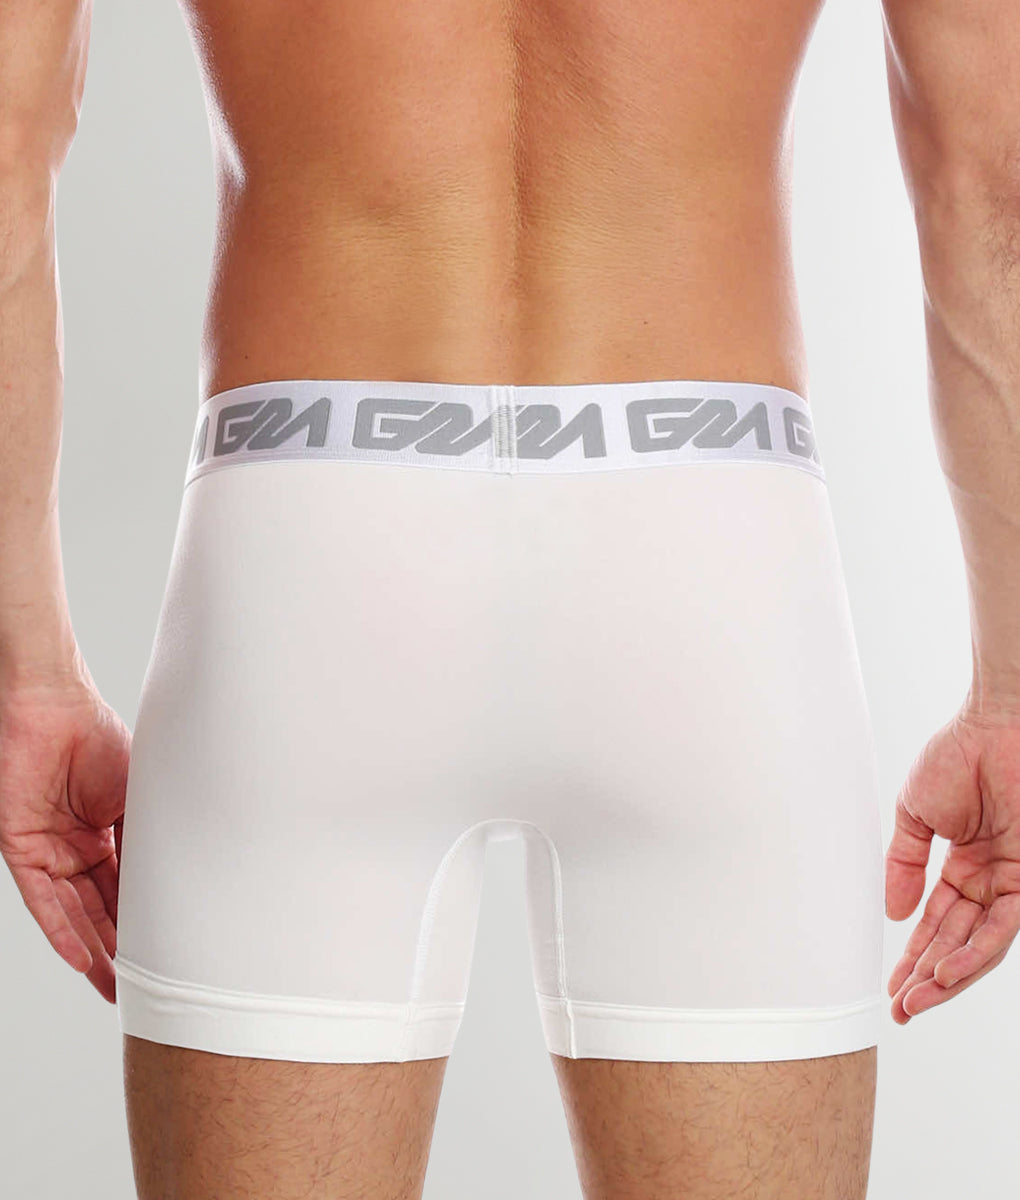 Garçon Model - Mens Underwear - Briefs for Men - Brief Green - Green - 1 x  SIZE S at  Men's Clothing store